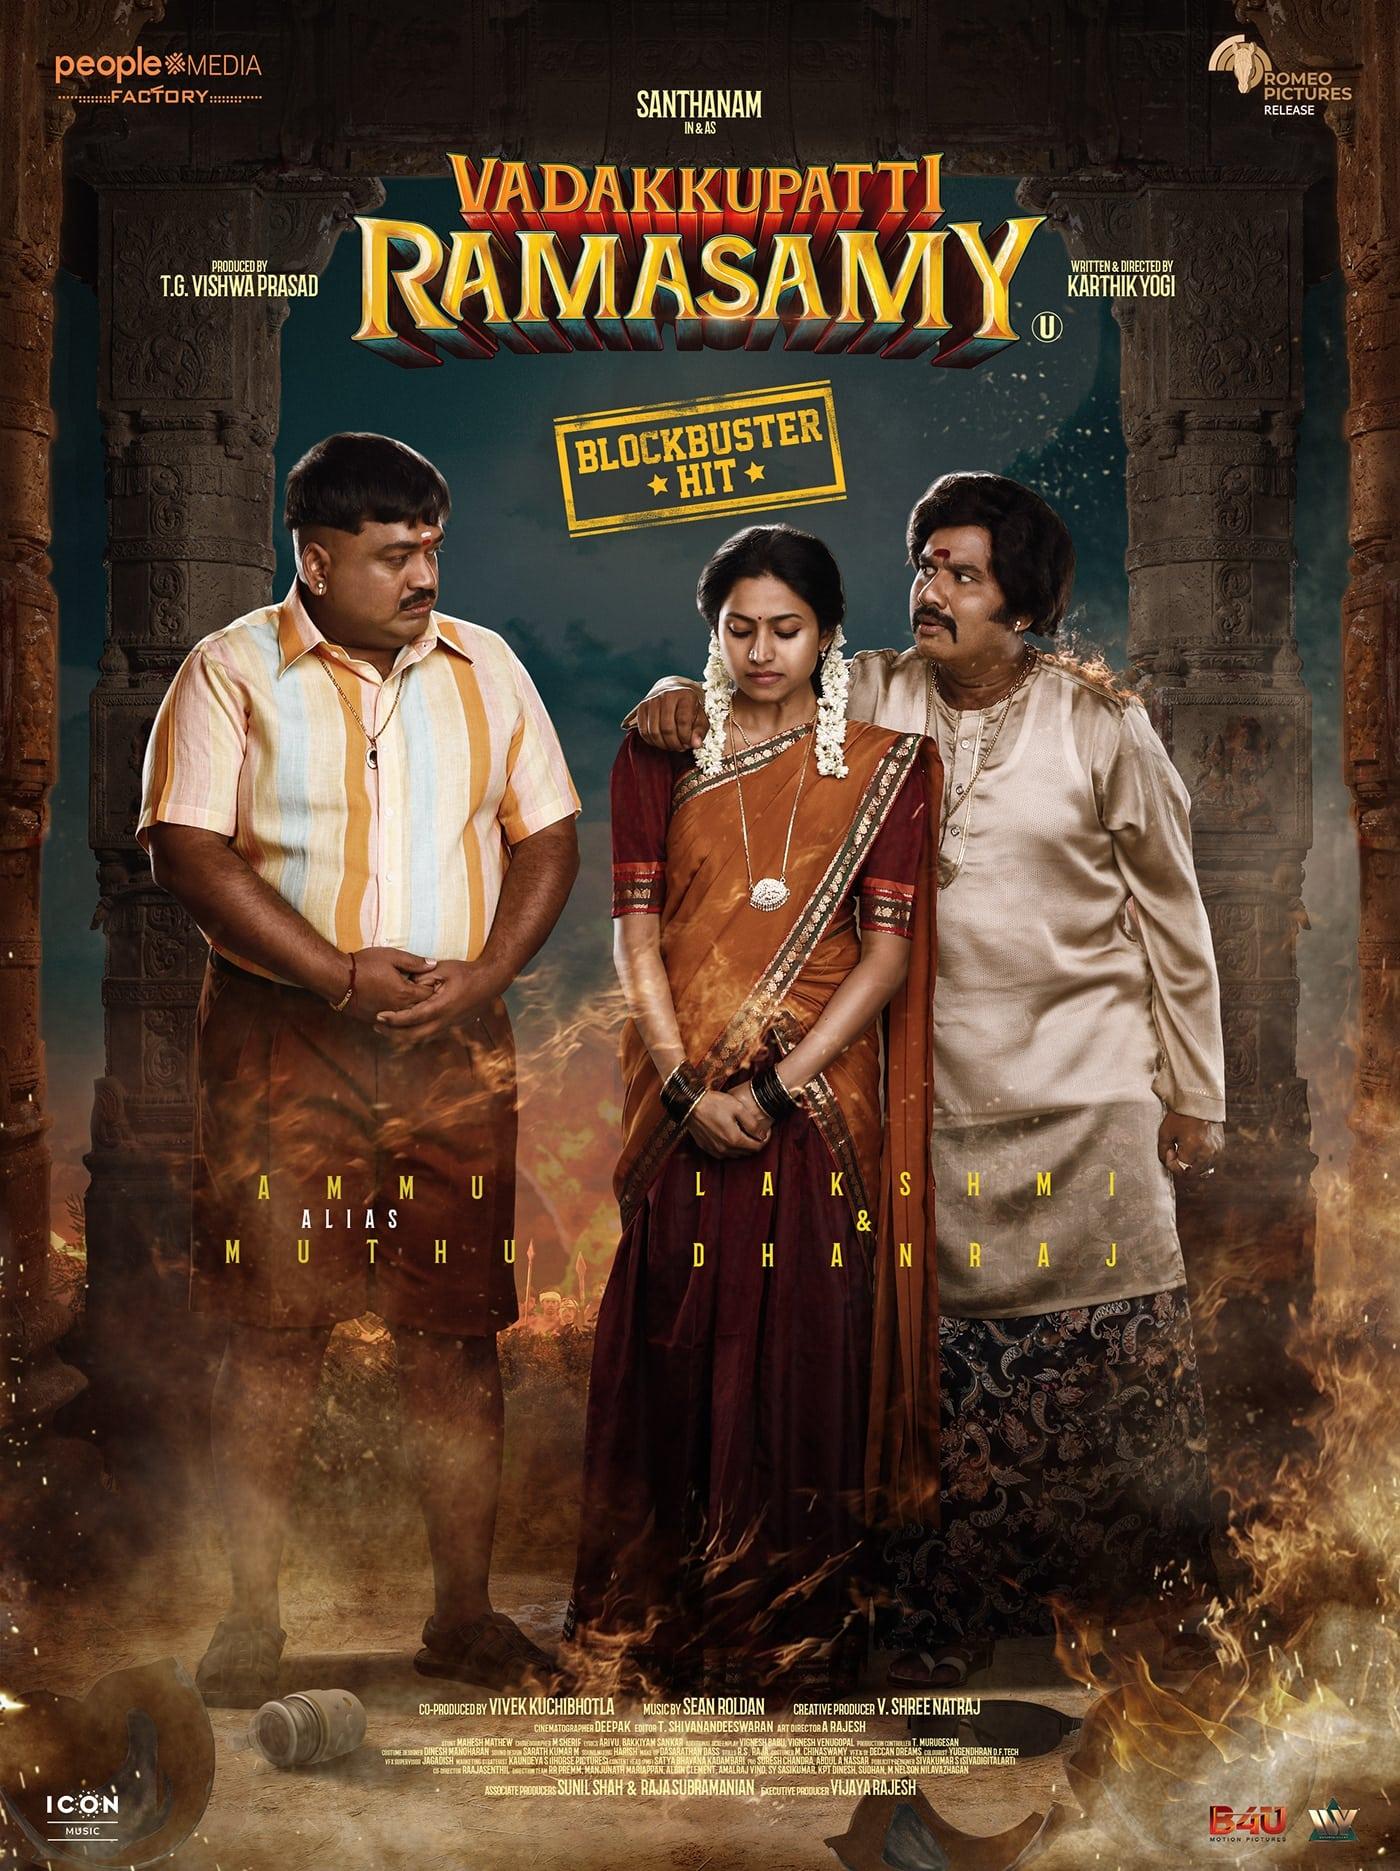 Vadakkupatti Ramasamy poster